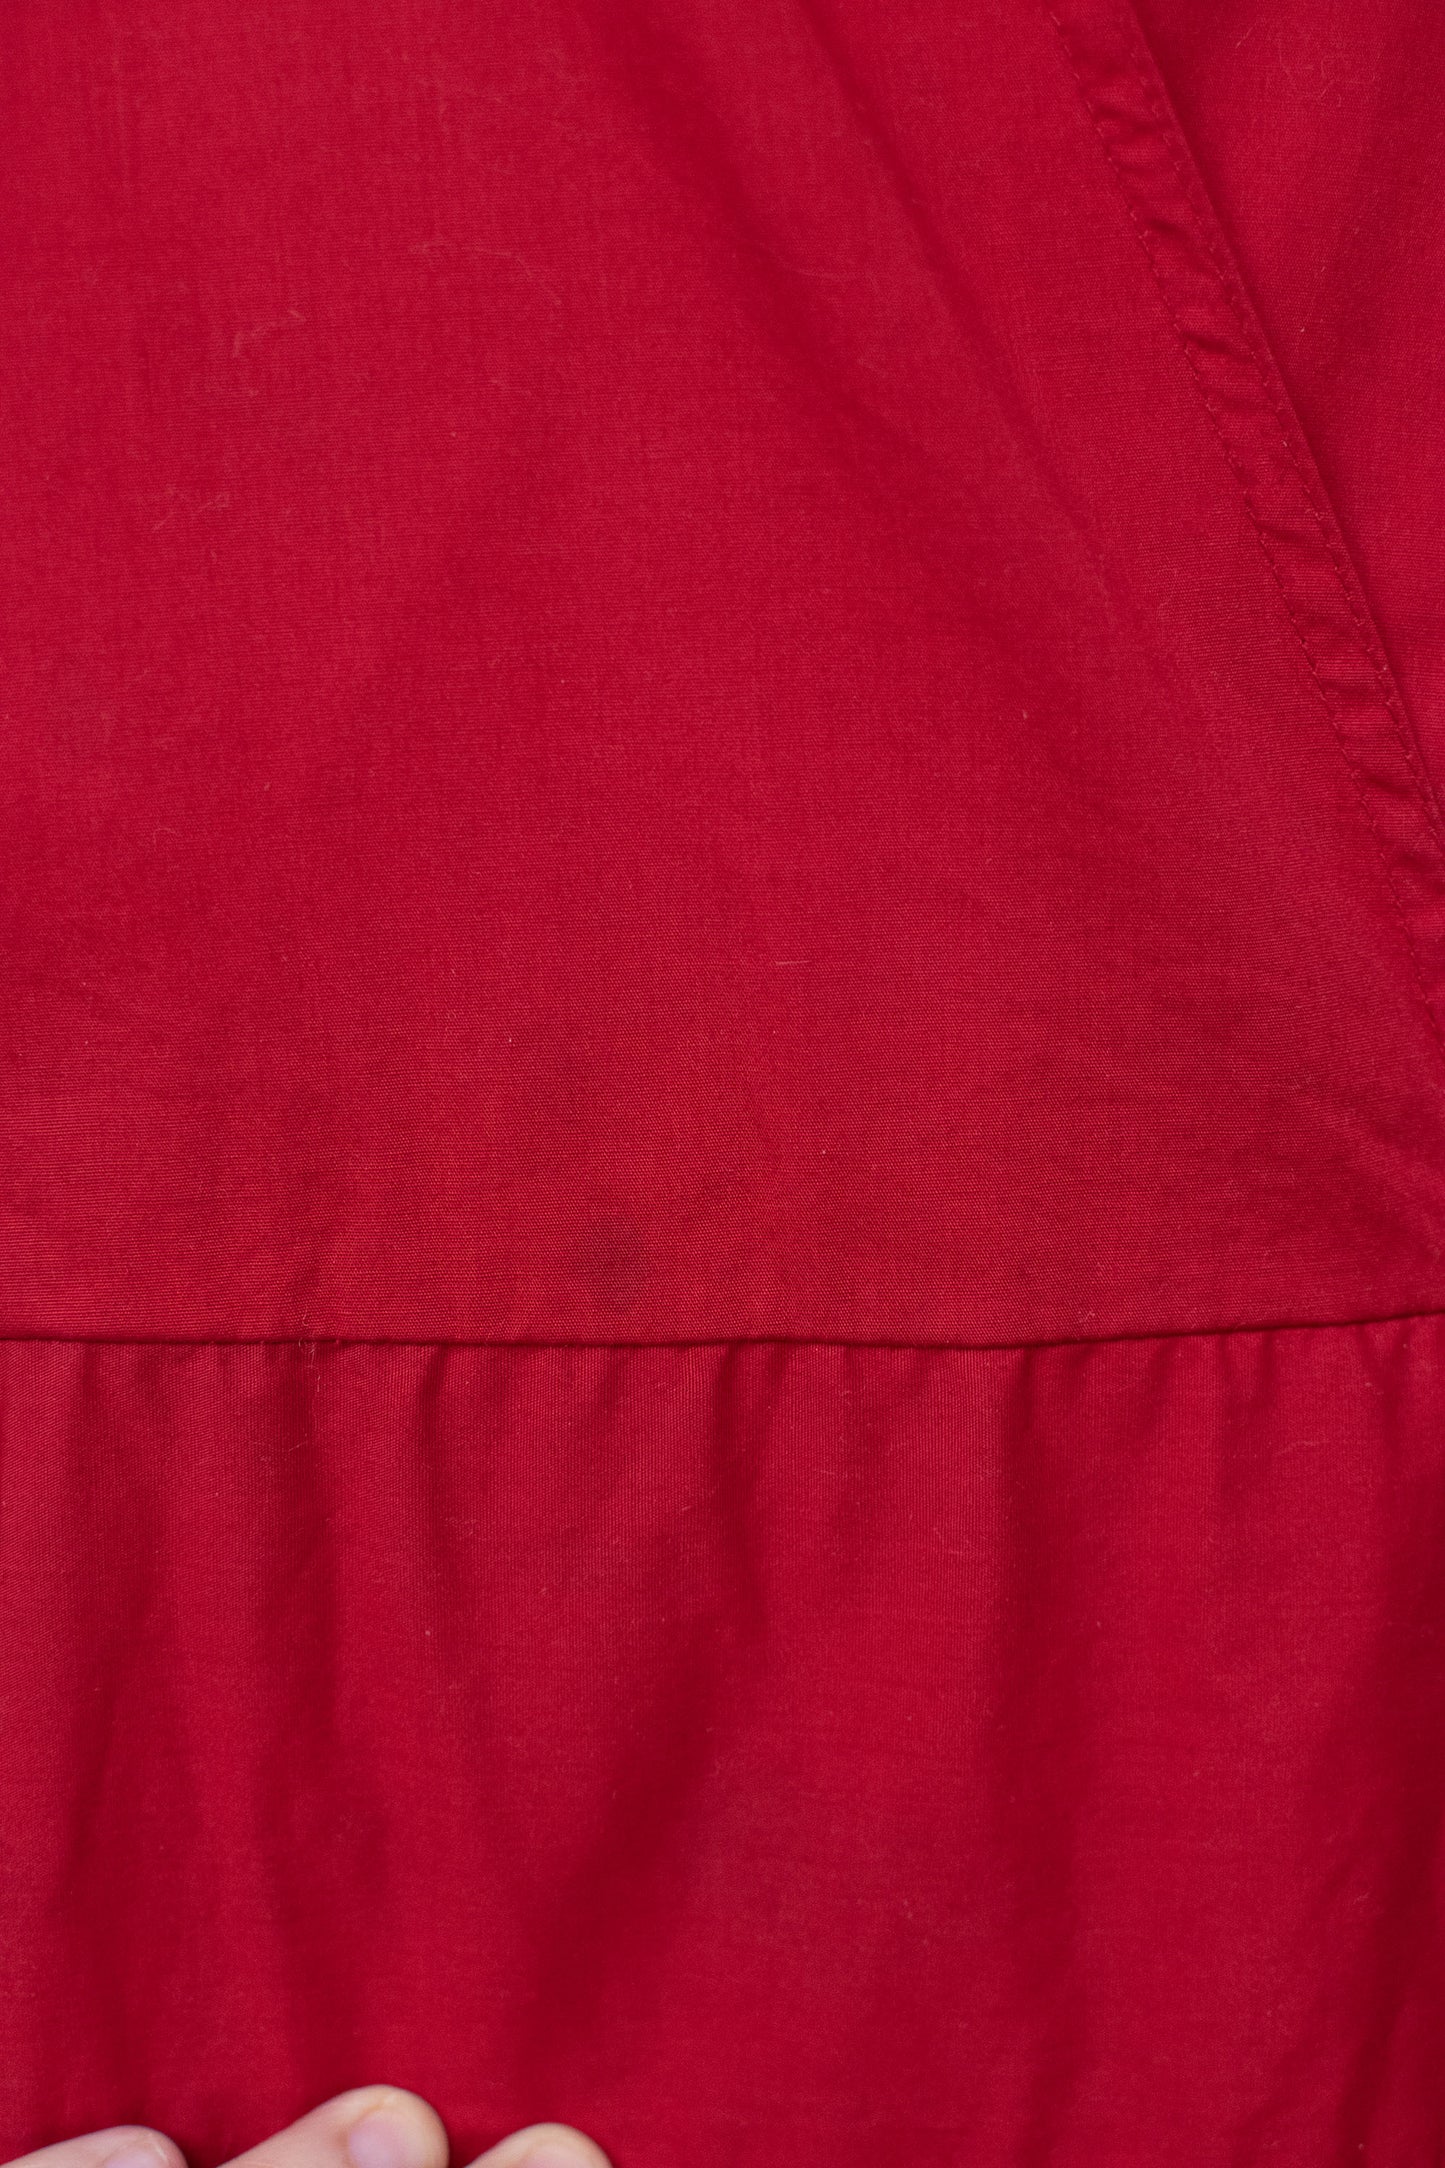 1980s Red Dress | Norma Kamali